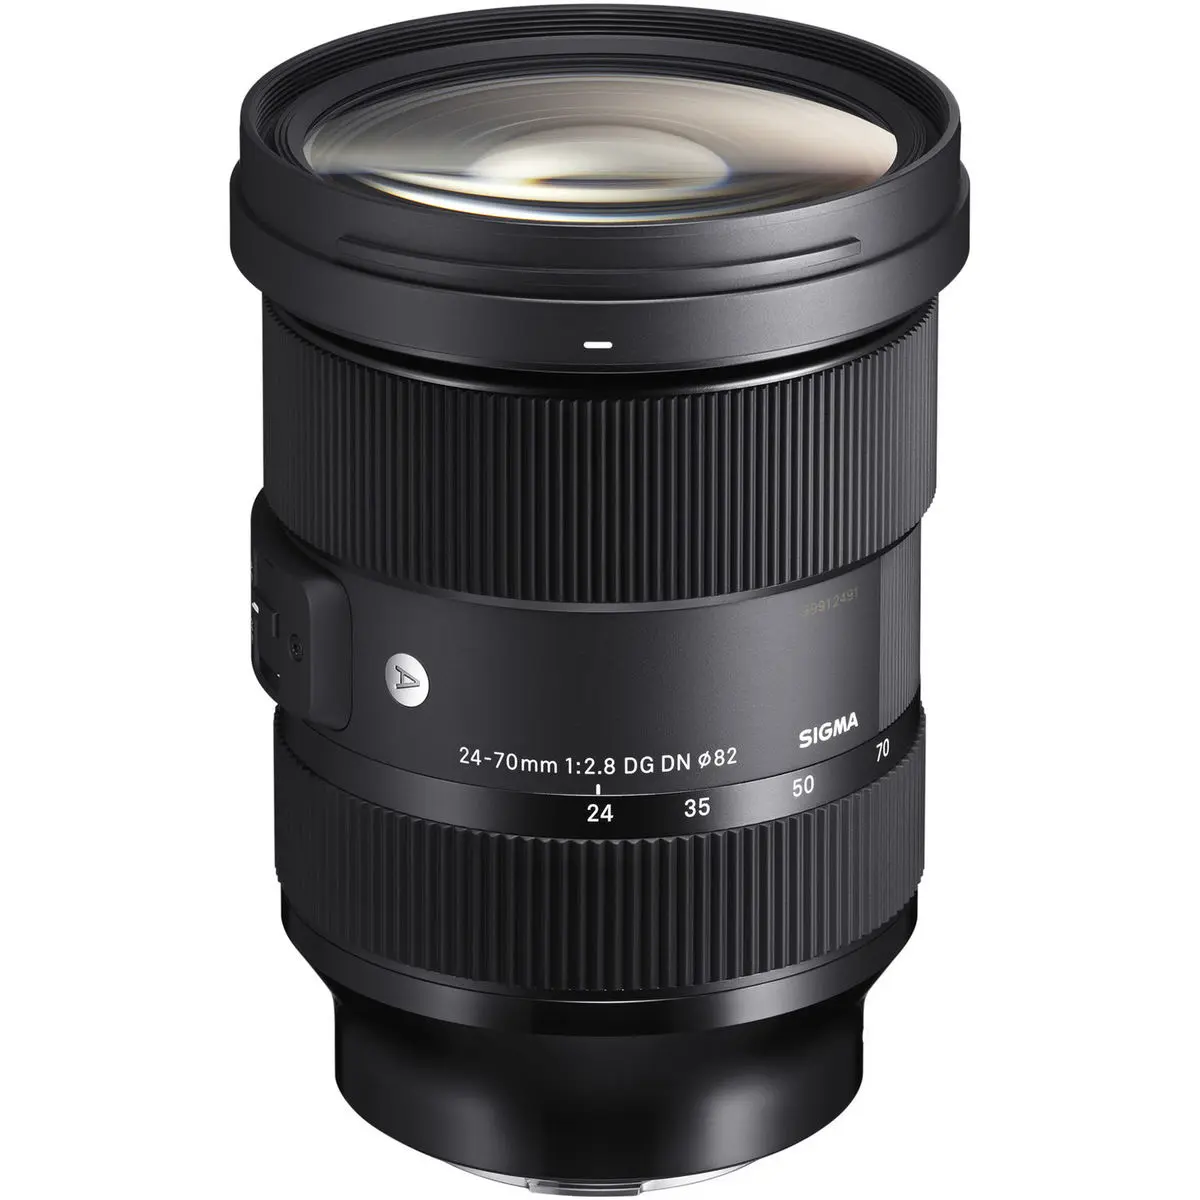 Sigma 24-70mm F2.8 DG DN | Art (E-mount) Lens